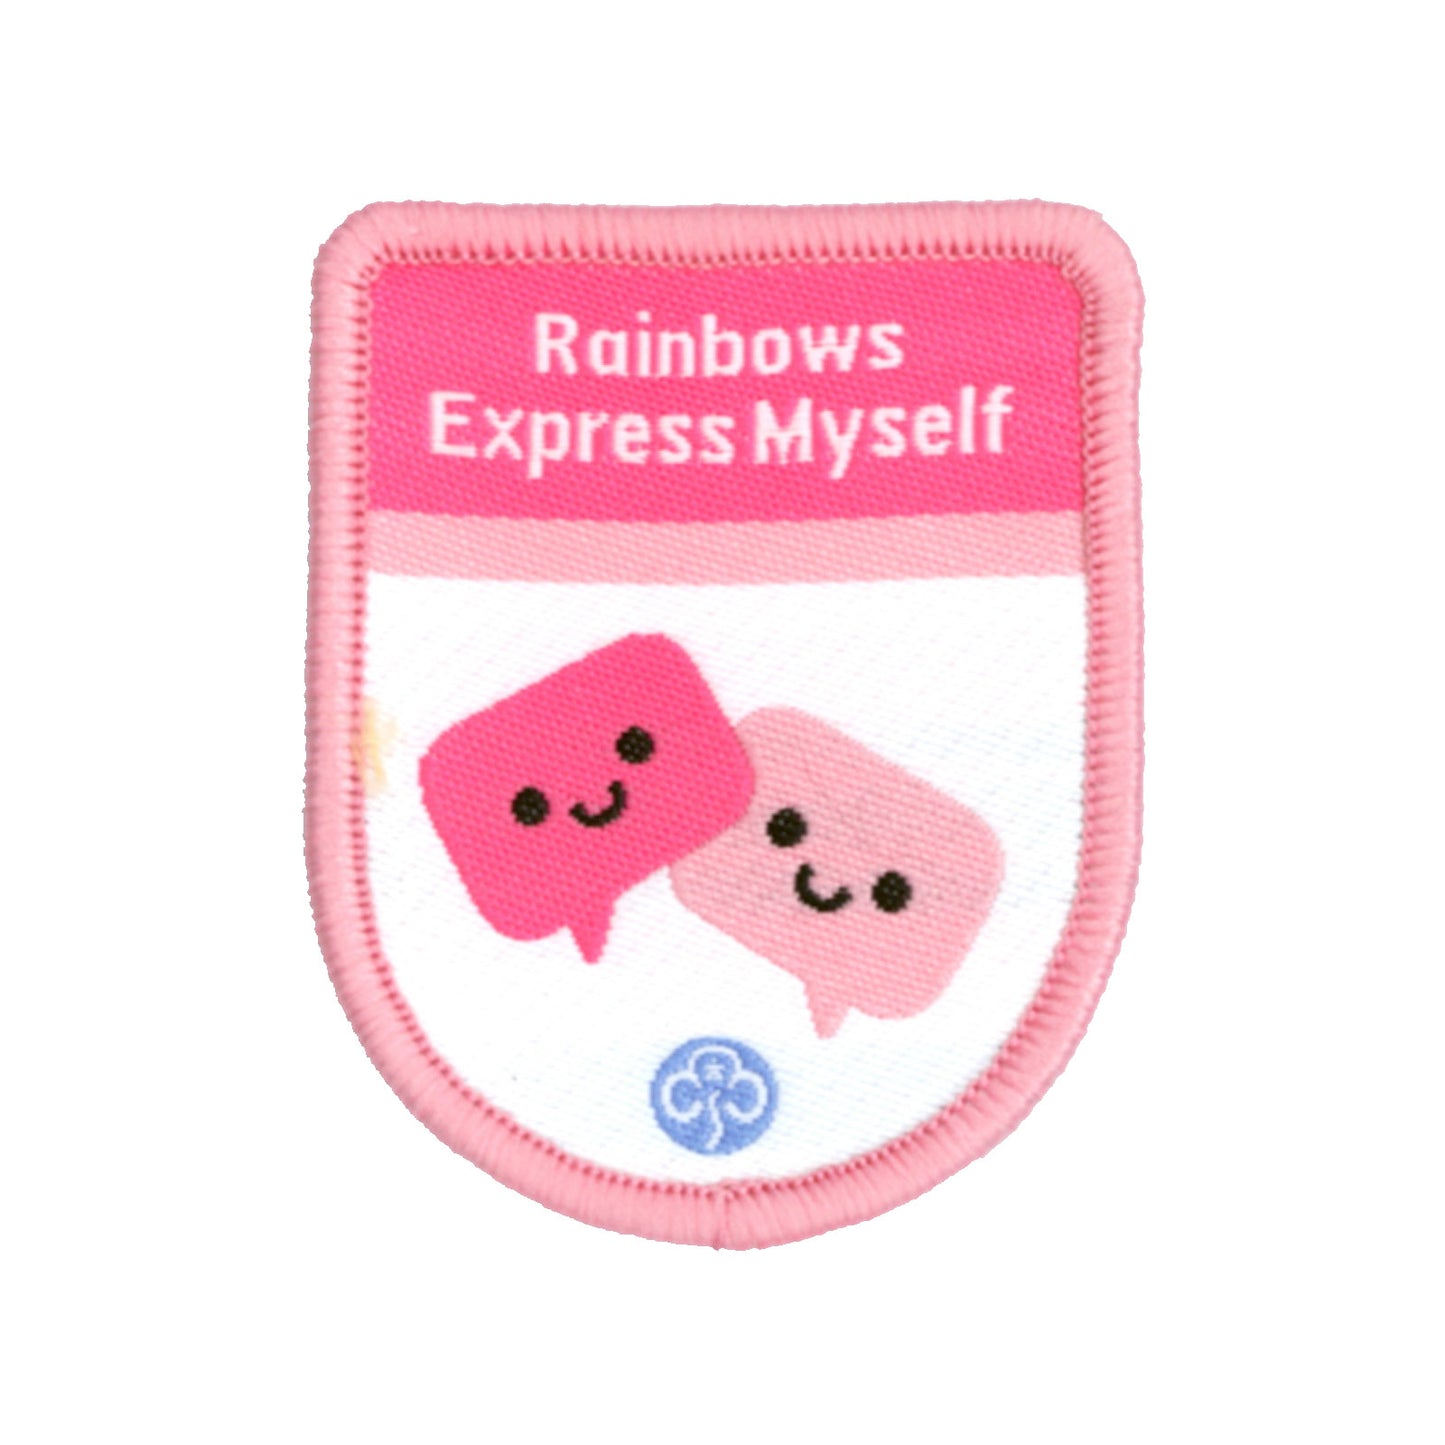 Rainbows Express Myself Theme Award Woven Badge